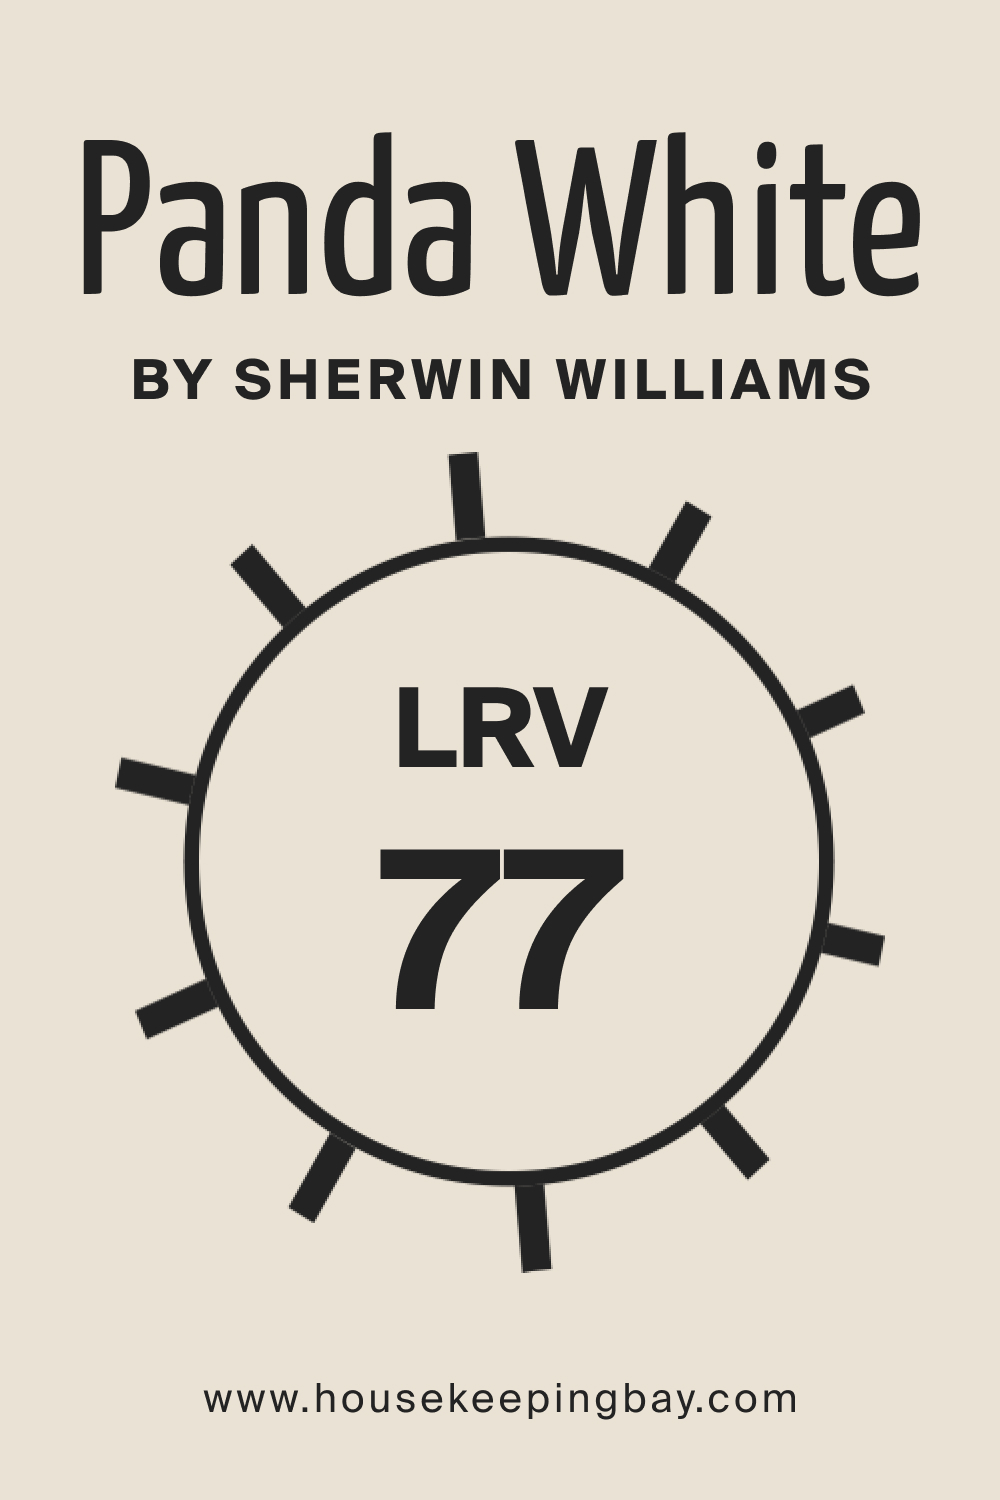 SW Panda White by Sherwin Williams. LRV – 77